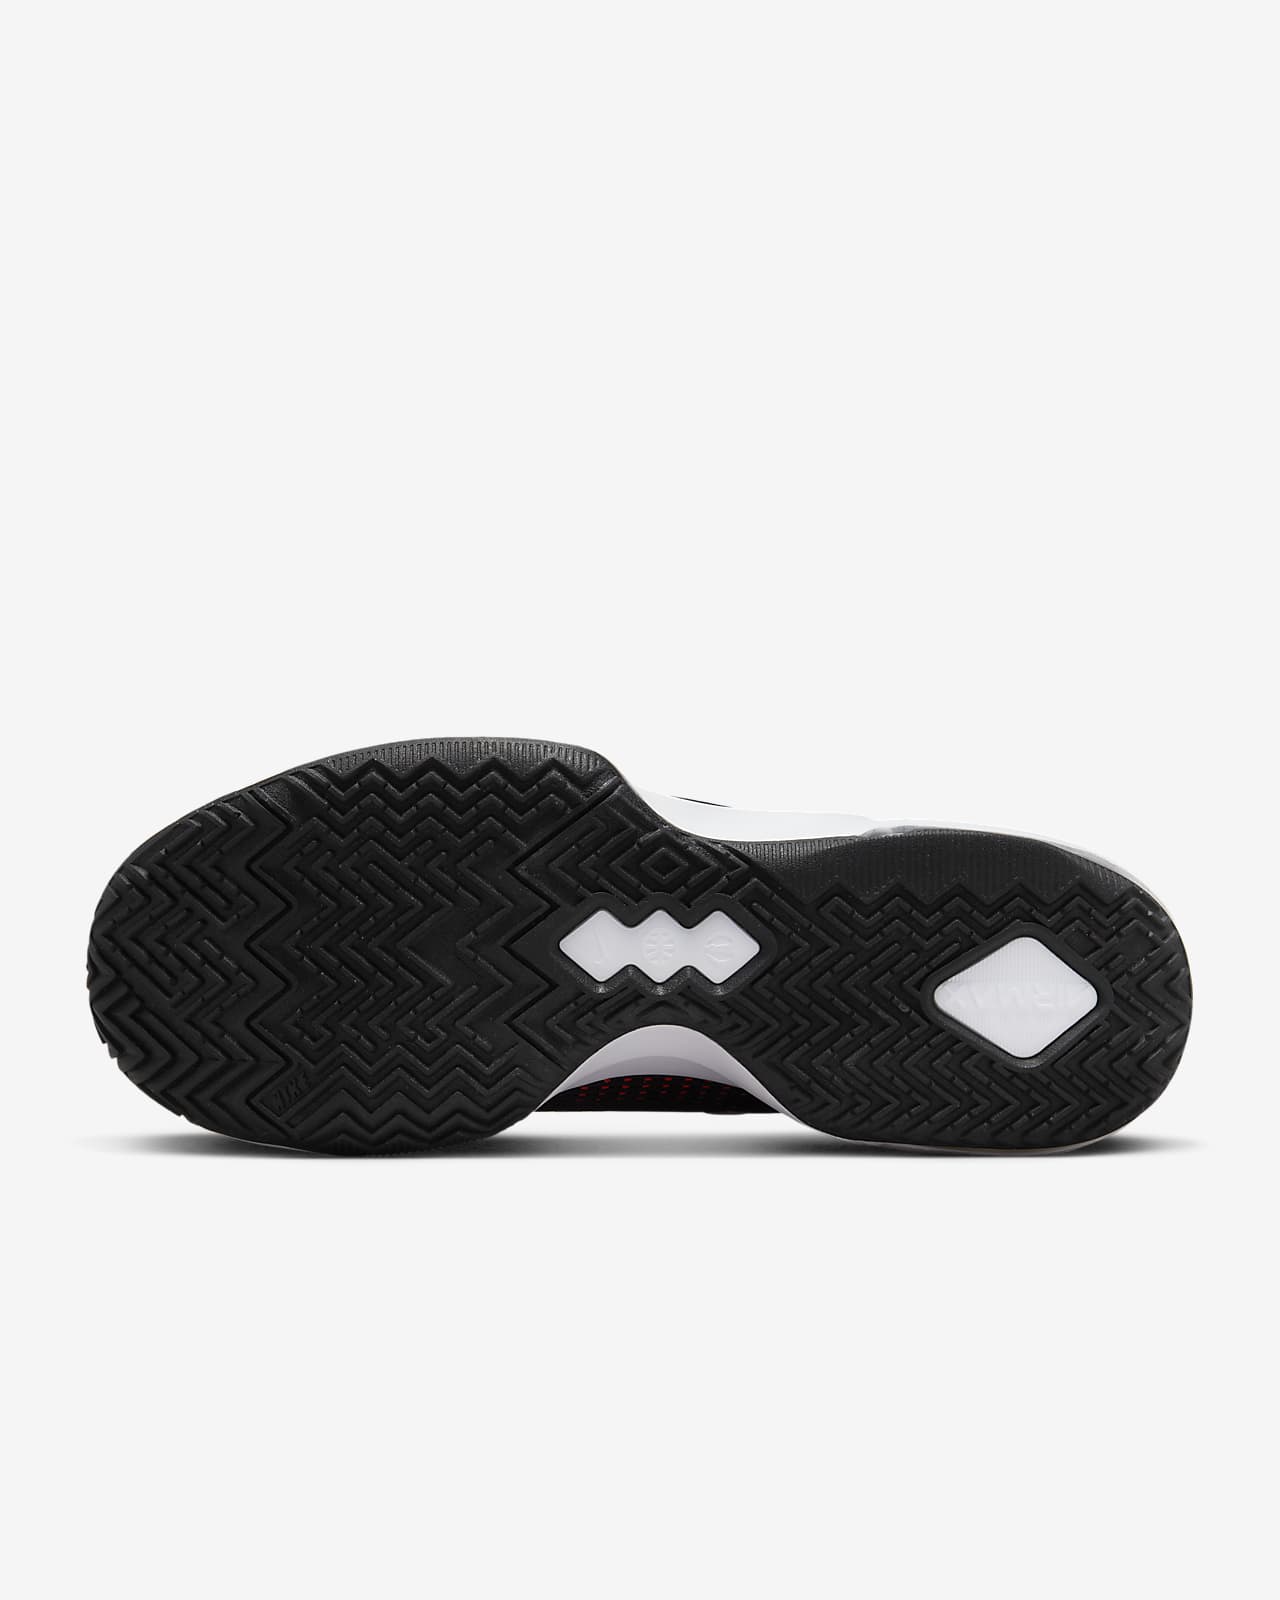 whistle Decipher Will Nike Air Max Impact 3 Basketball Shoe. Nike LU